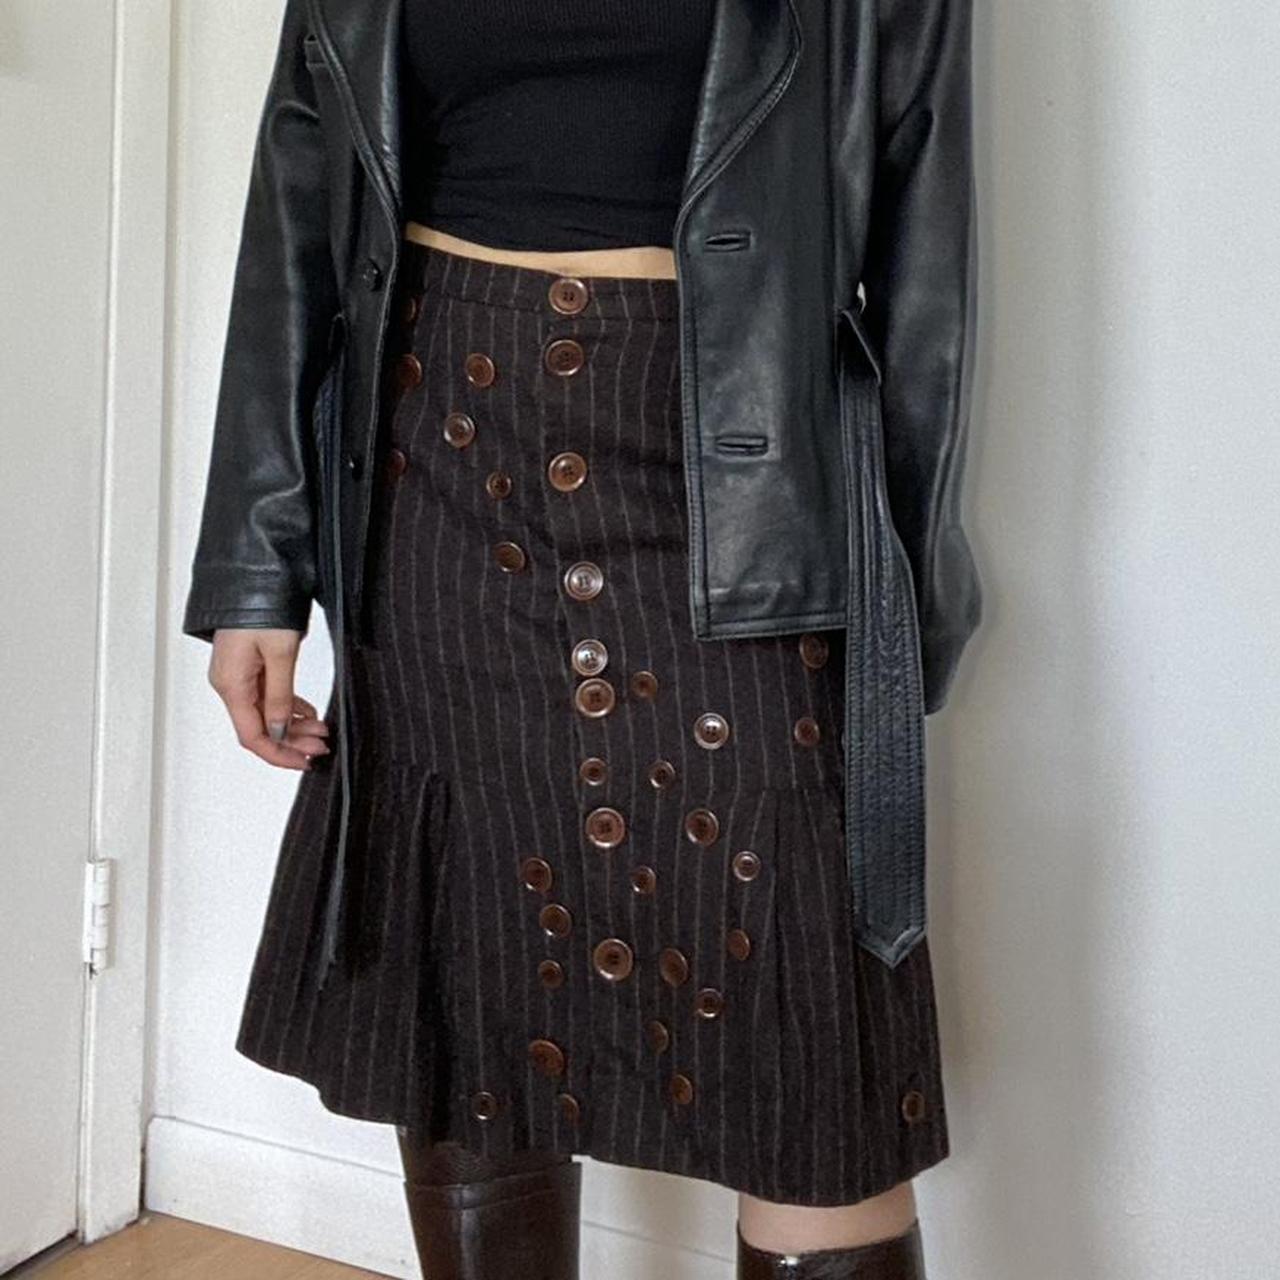 Moschino Cheap & Chic Women's Brown and Tan Skirt